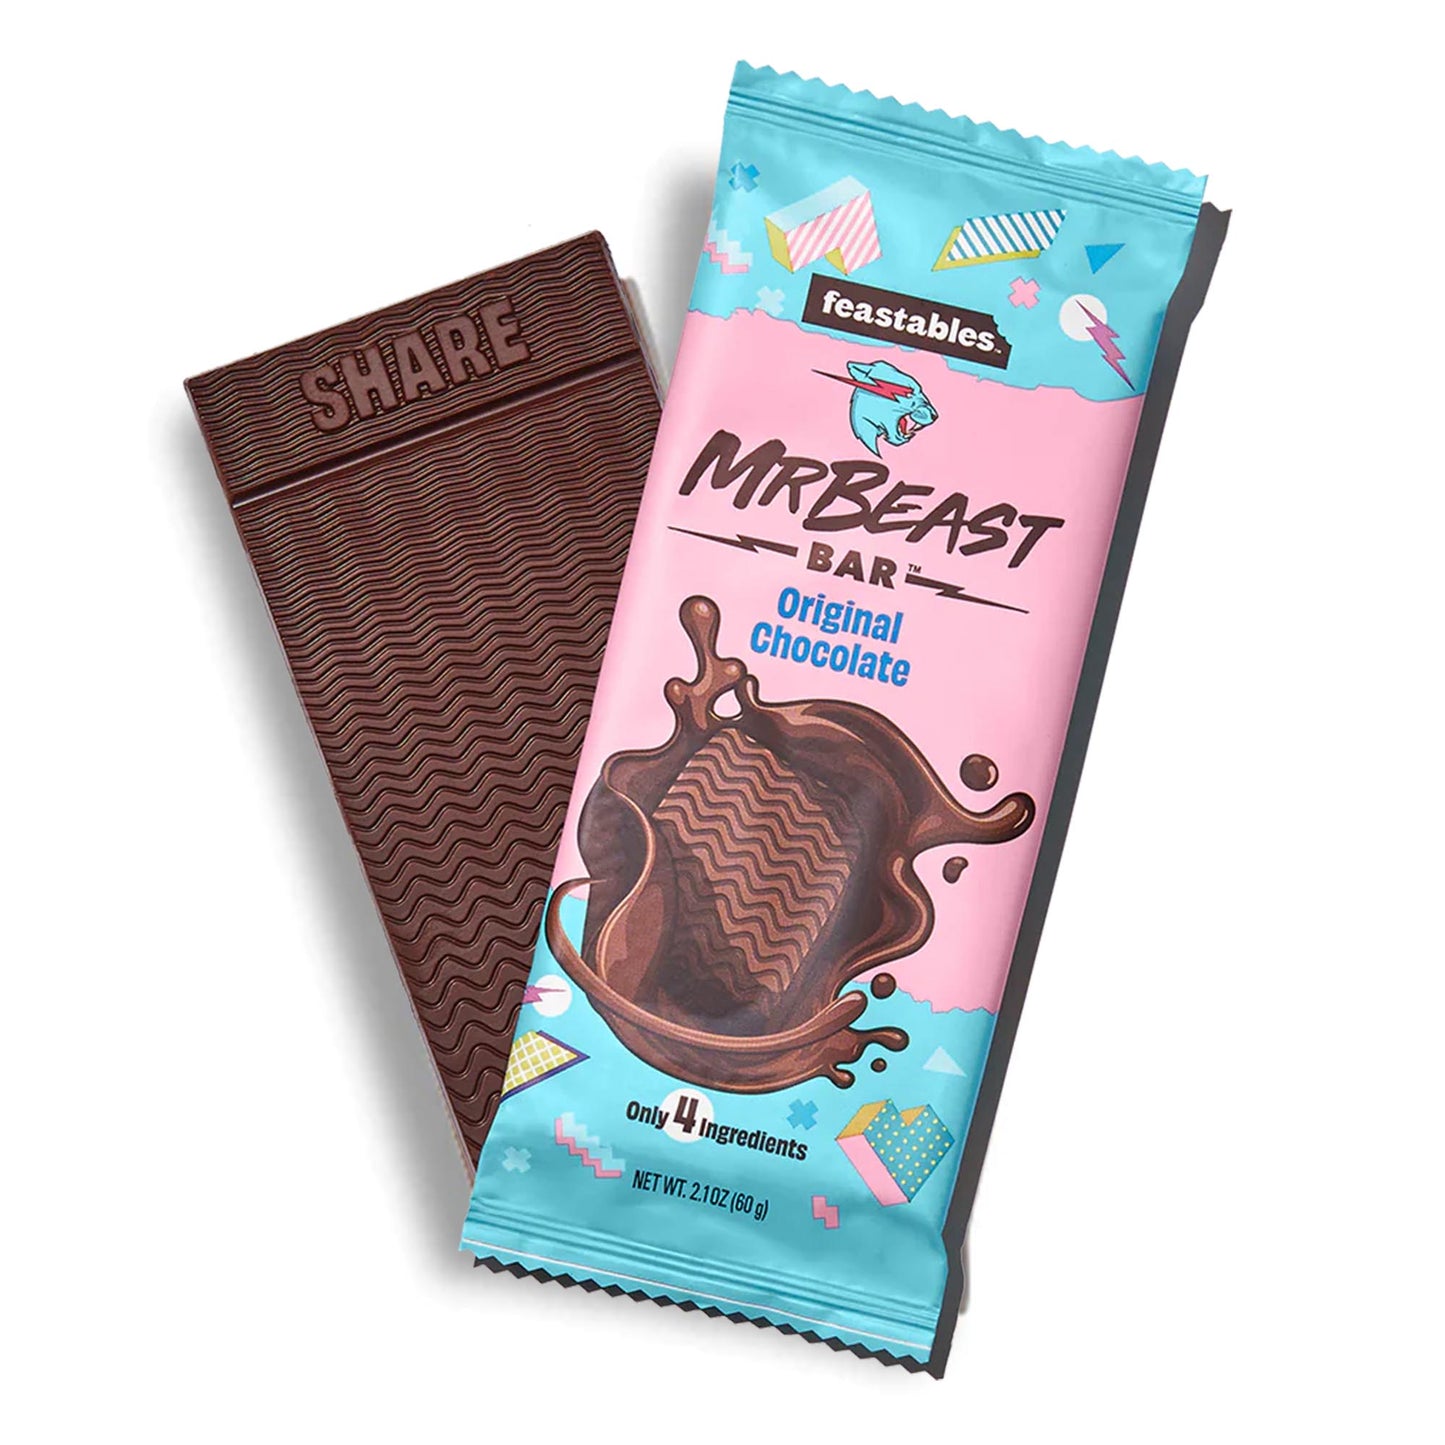 Feastables MrBeast Bar Original Chocolate